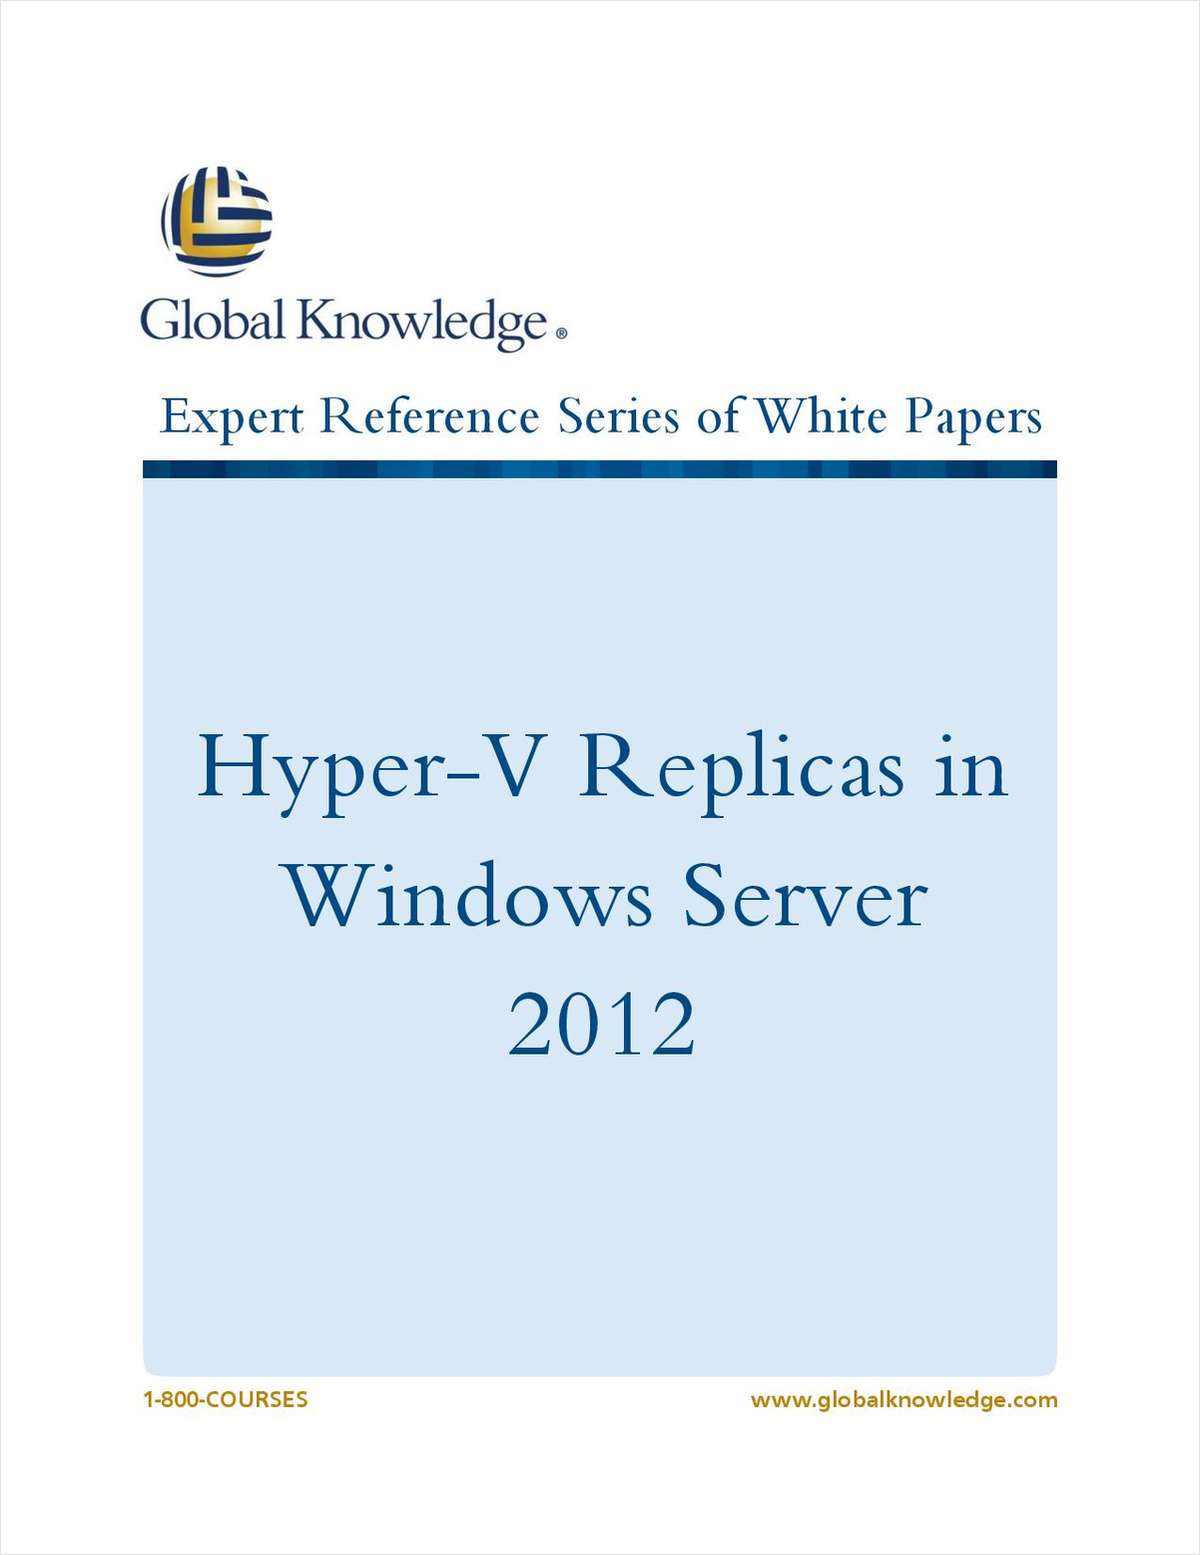 Hyper-V Replicas in Windows Server 2012